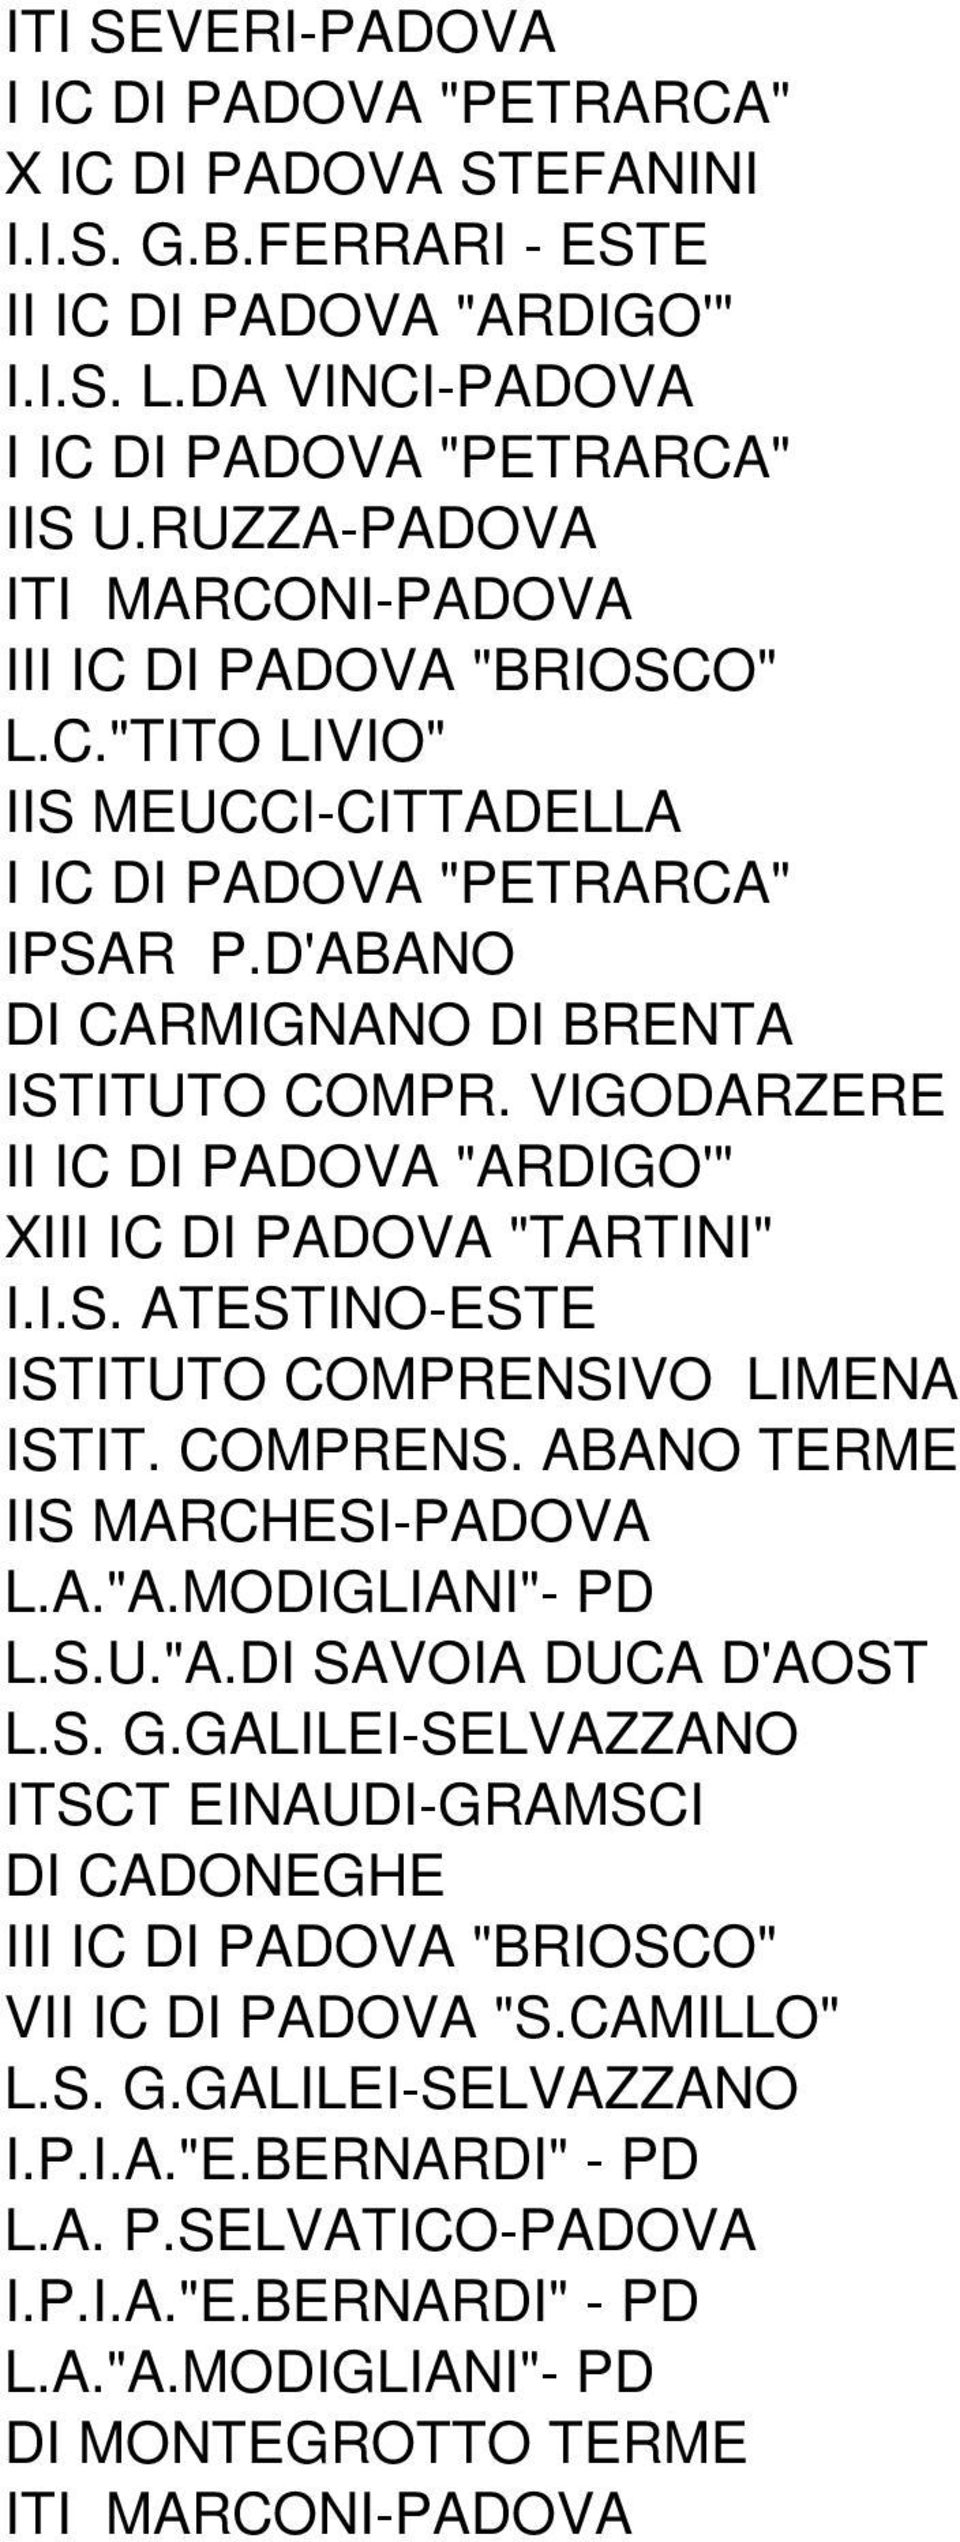 VIGODARZERE II IC DI PADOVA "ARDIGO'" XIII IC DI PADOVA "TARTINI" I.I.S. ATESTINO-ESTE ISTITUTO COMPRENSIVO LIMENA ISTIT. COMPRENS. ABANO TERME IIS MARCHESI-PADOVA L.A."A.MODIGLIANI"- PD L.S.U."A.DI SAVOIA DUCA D'AOST L.